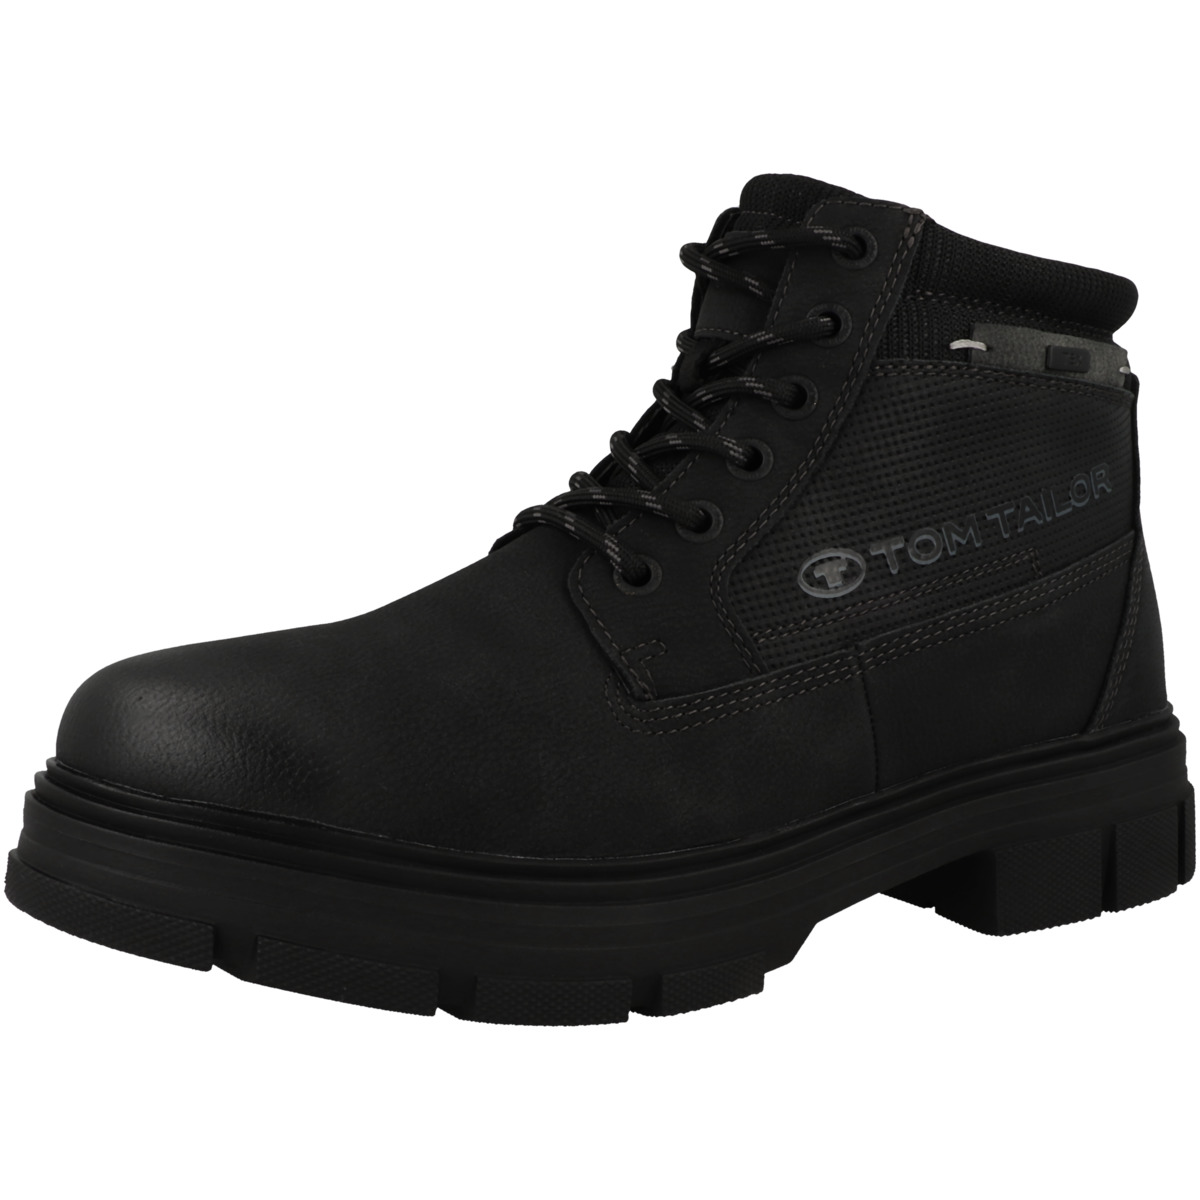 Tom Tailor 6380460001 Boots schwarz